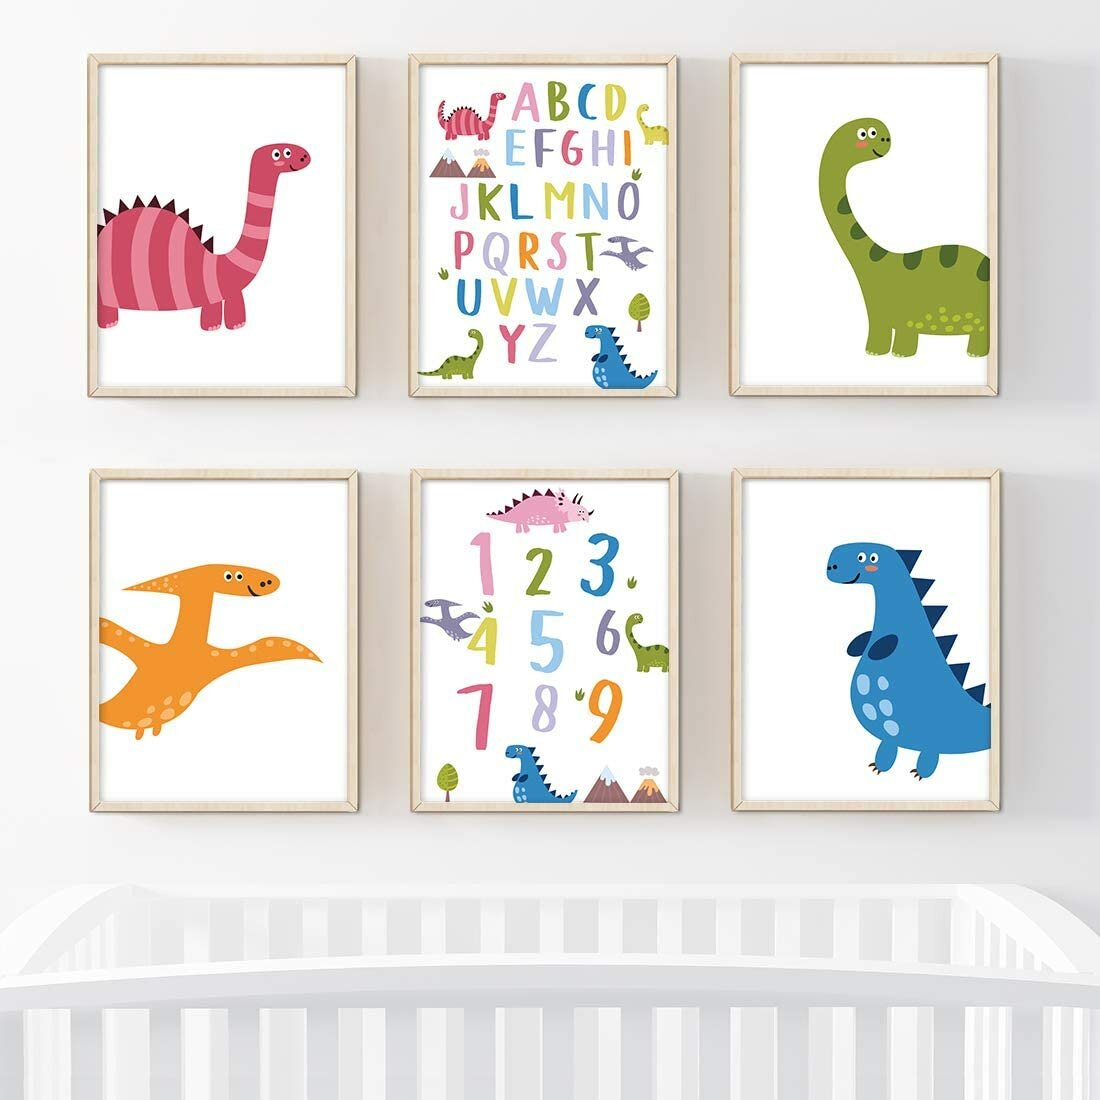 Dinosaurs Alphabet ABC Wall Decals Educational Stickers Nursery Baby Room  Decor